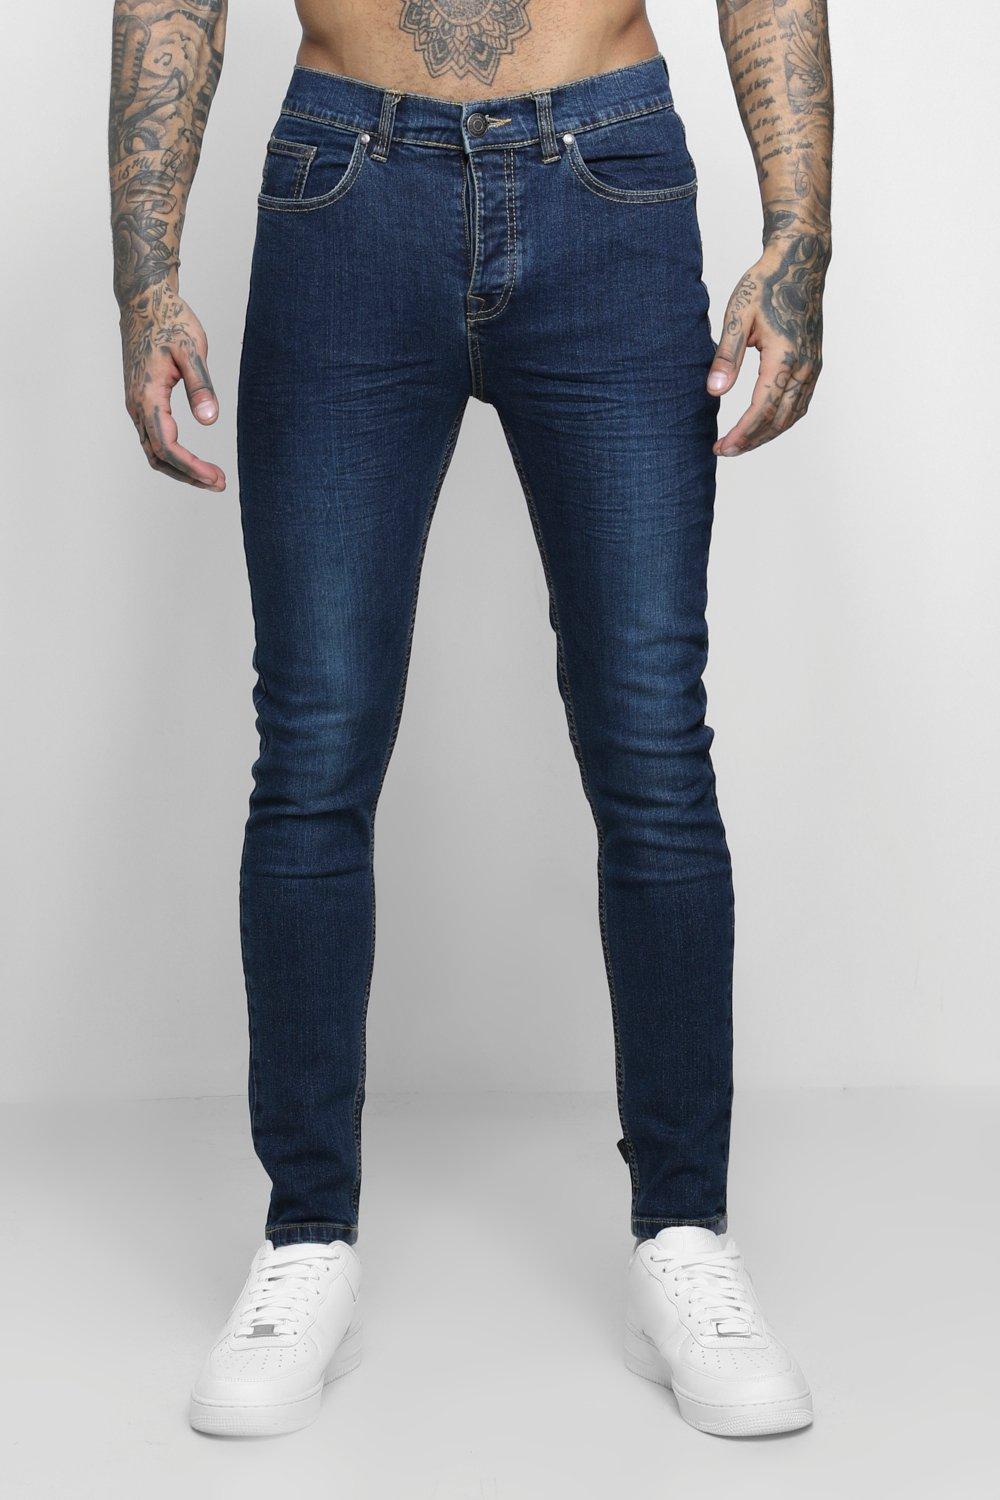 Indigo Wash Skinny Fit Jeans | boohooMAN